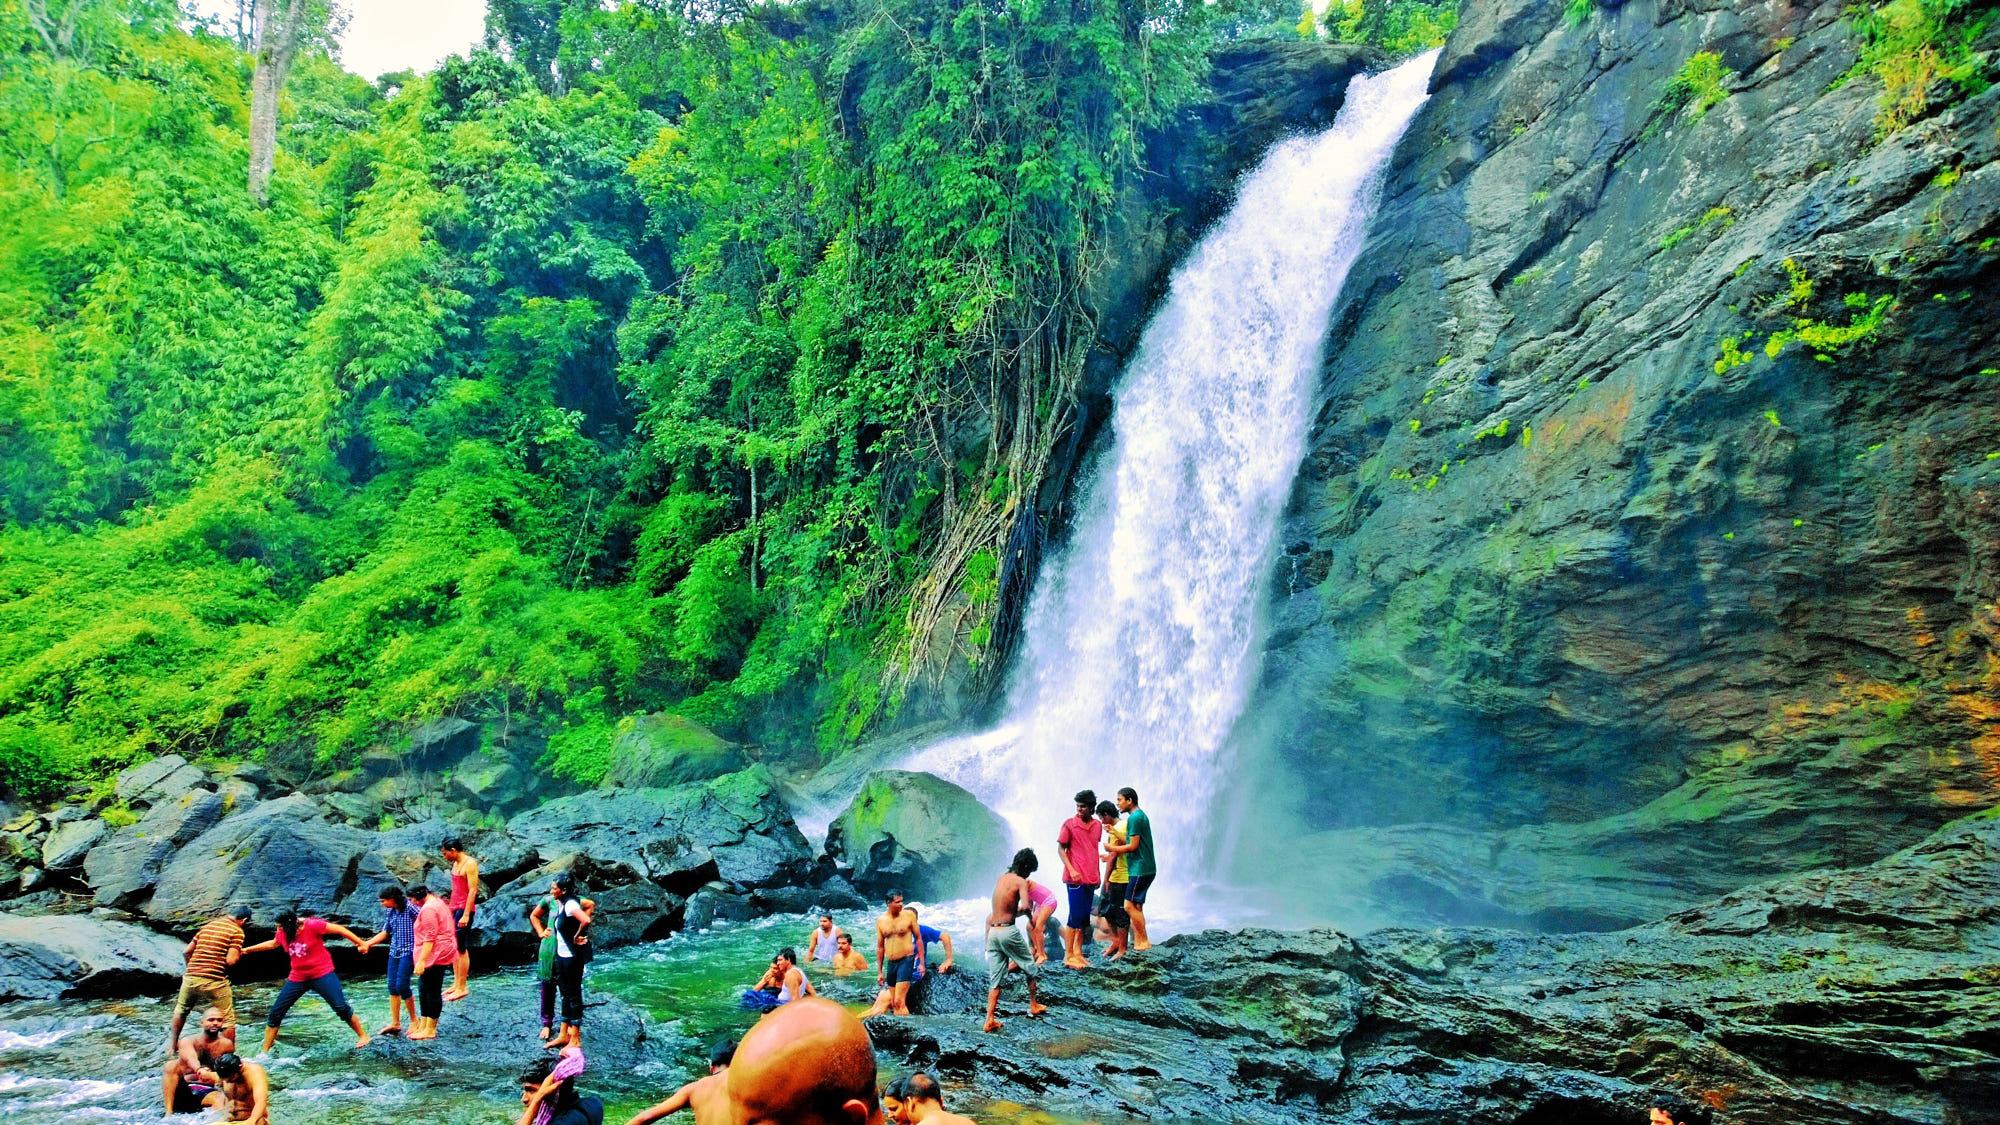 Soochipara Falls by Jan Waseem - Photo 54354300 / 500px